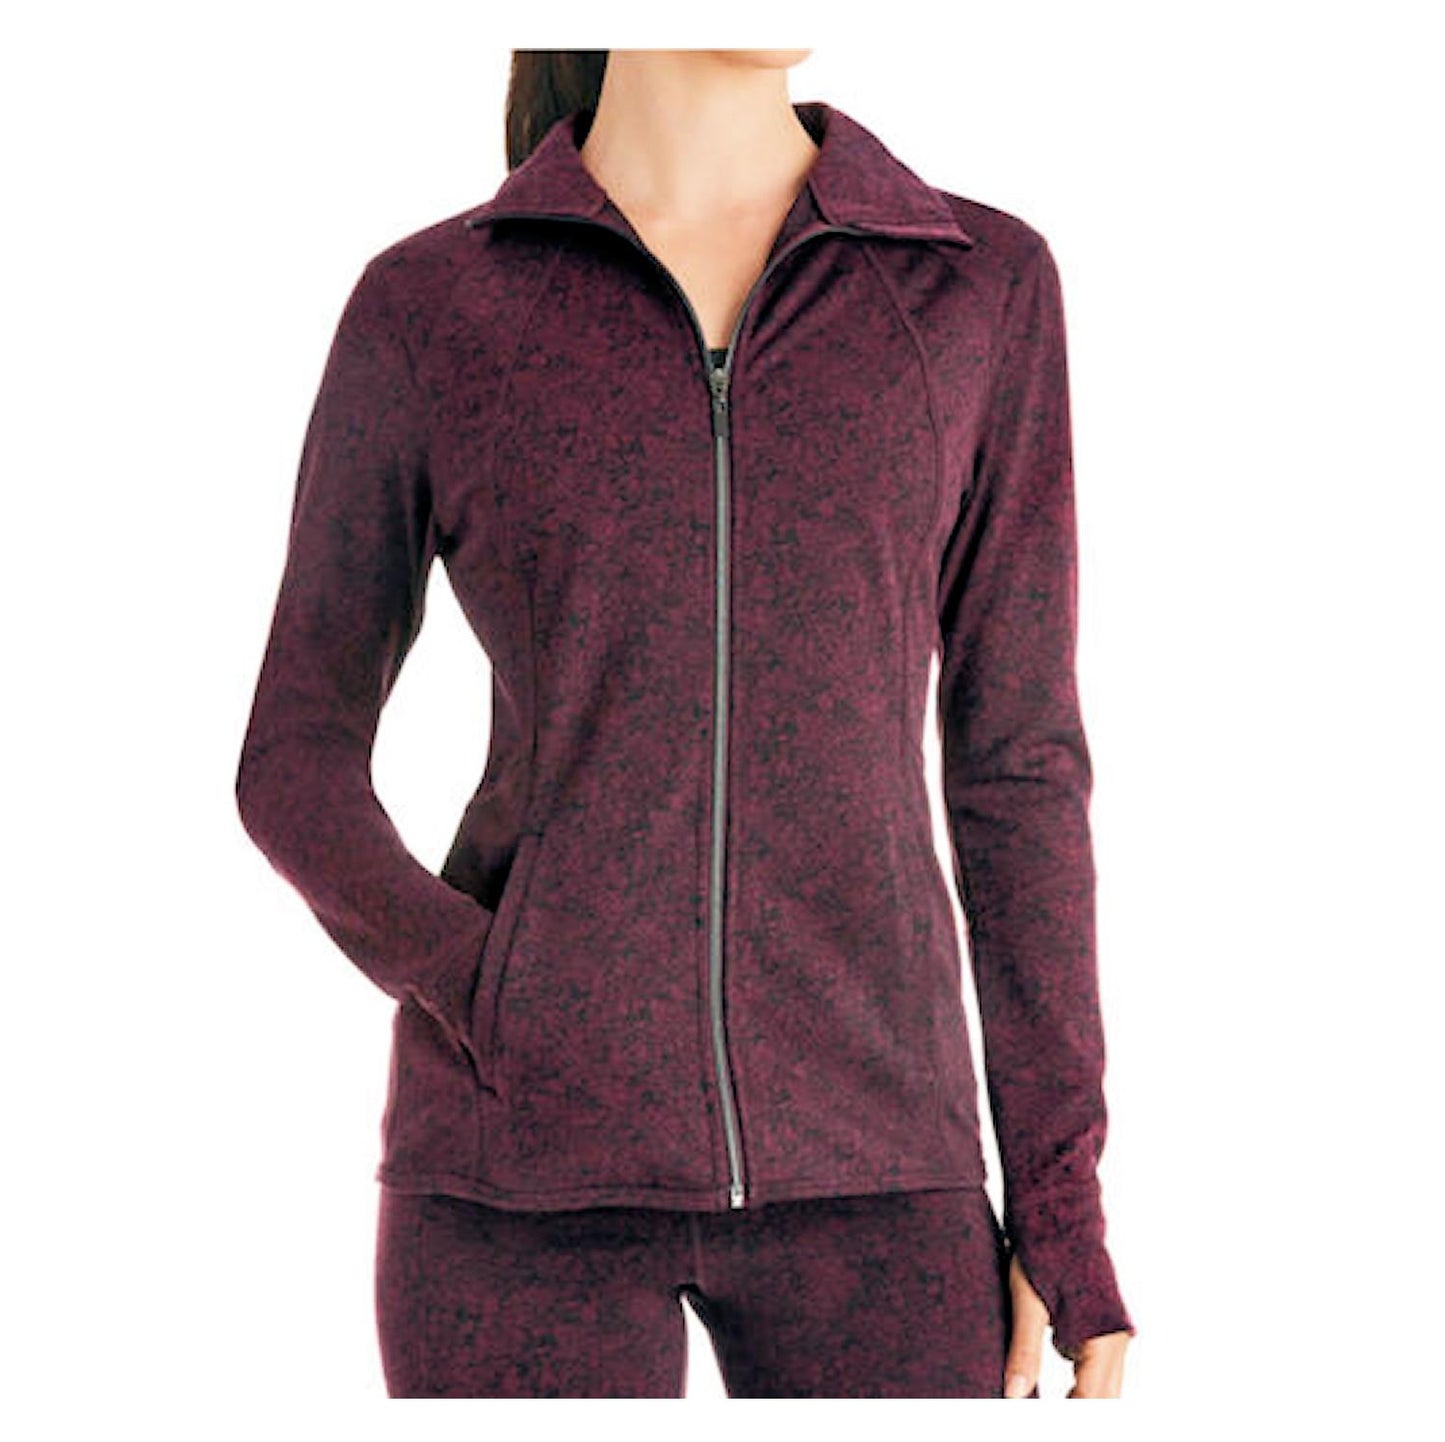 Member's Mark Women's Zip Up Athletic Textured Jacket Thumbhole Burgundy Small